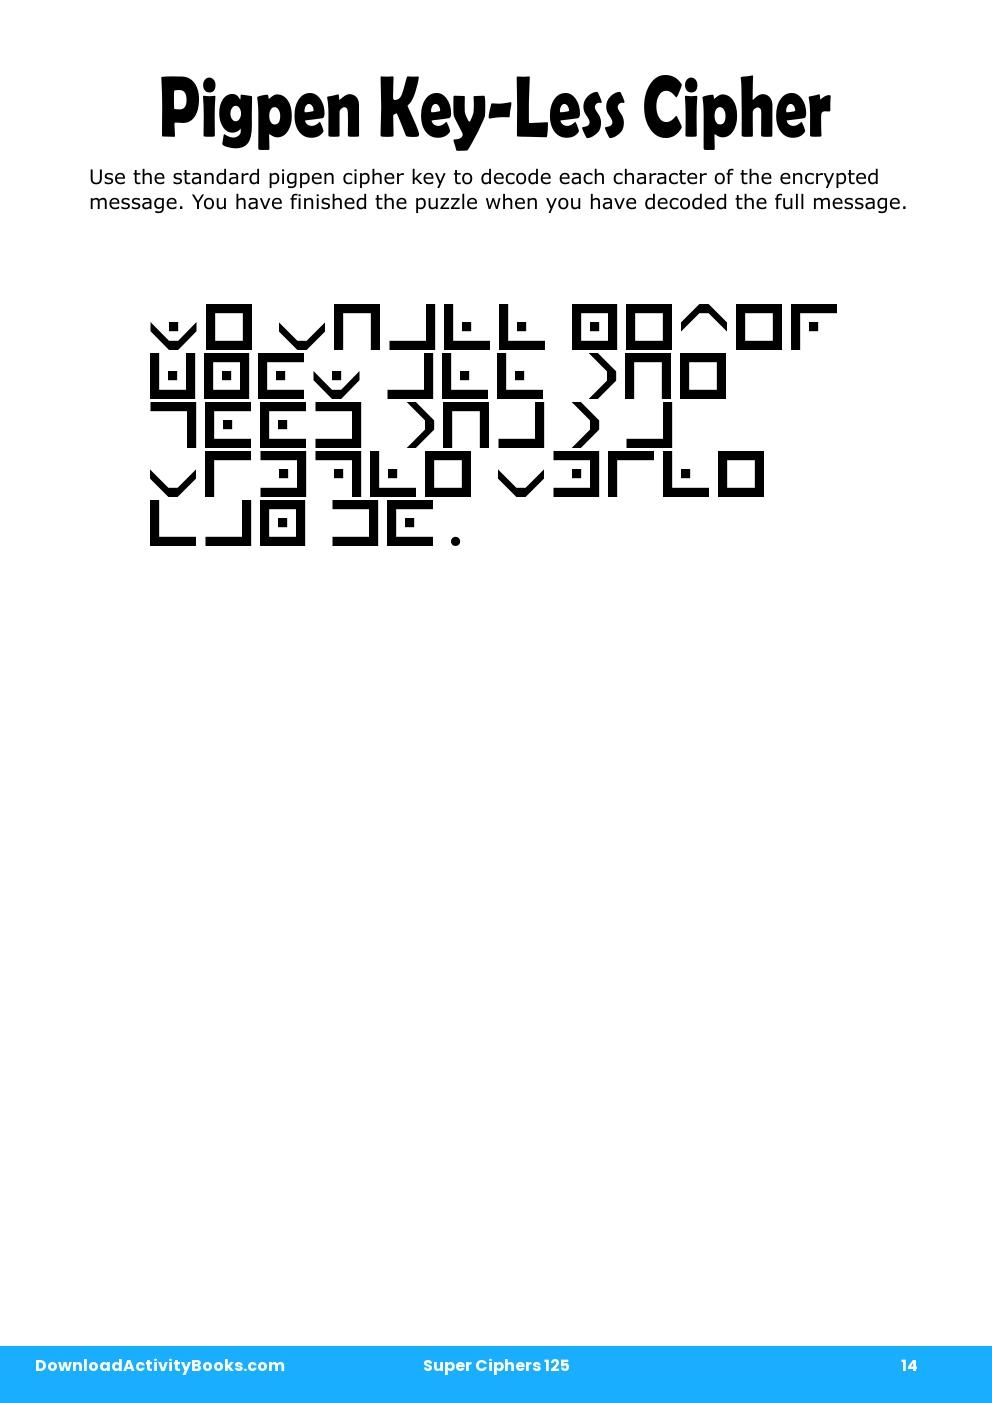 Pigpen Cipher in Super Ciphers 125